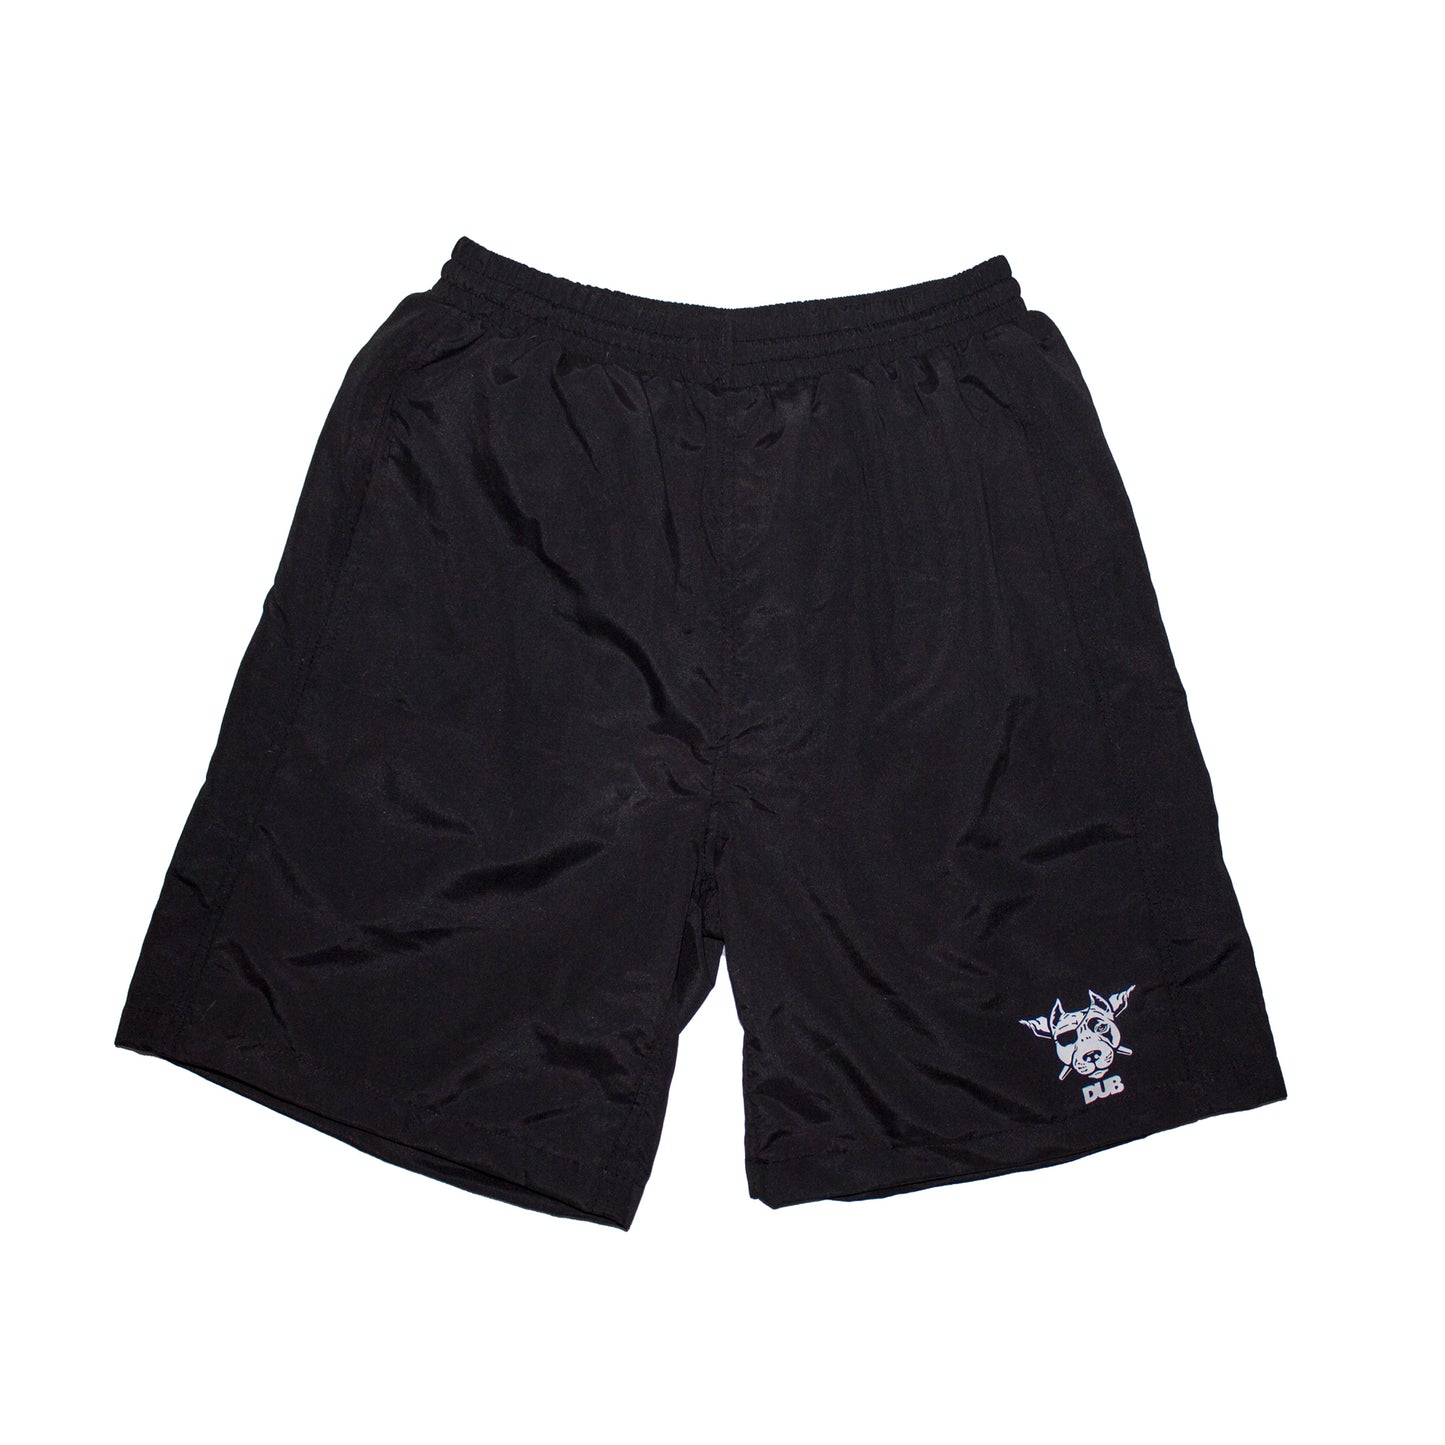 DUB BMX - Blazers Shorts/Black